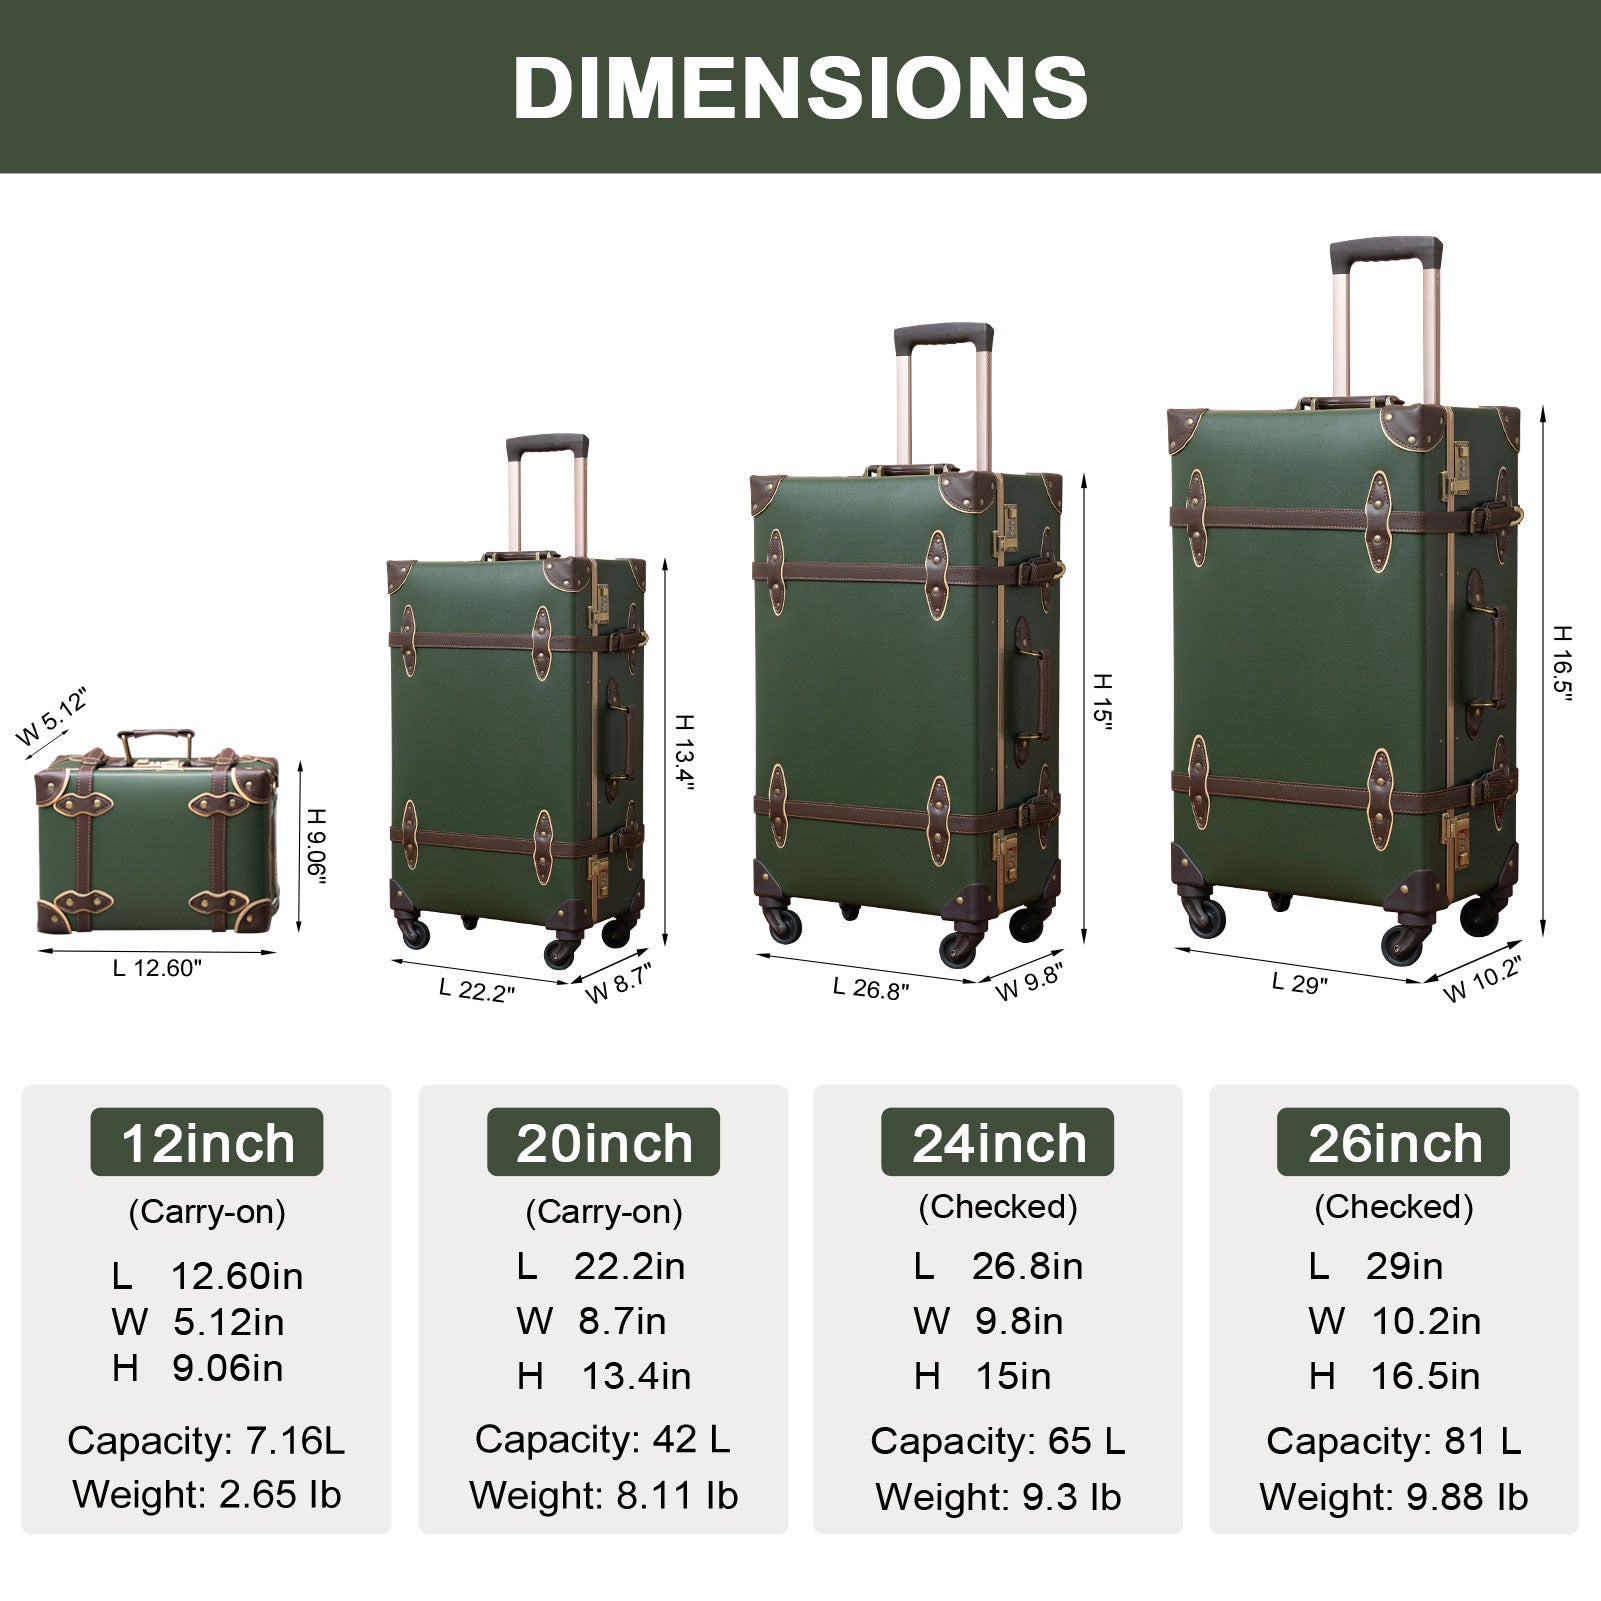 urecity vintage suitcase set for women, vintage luggage sets for women 2  piece, cute designer trunk luggage, retro suit case